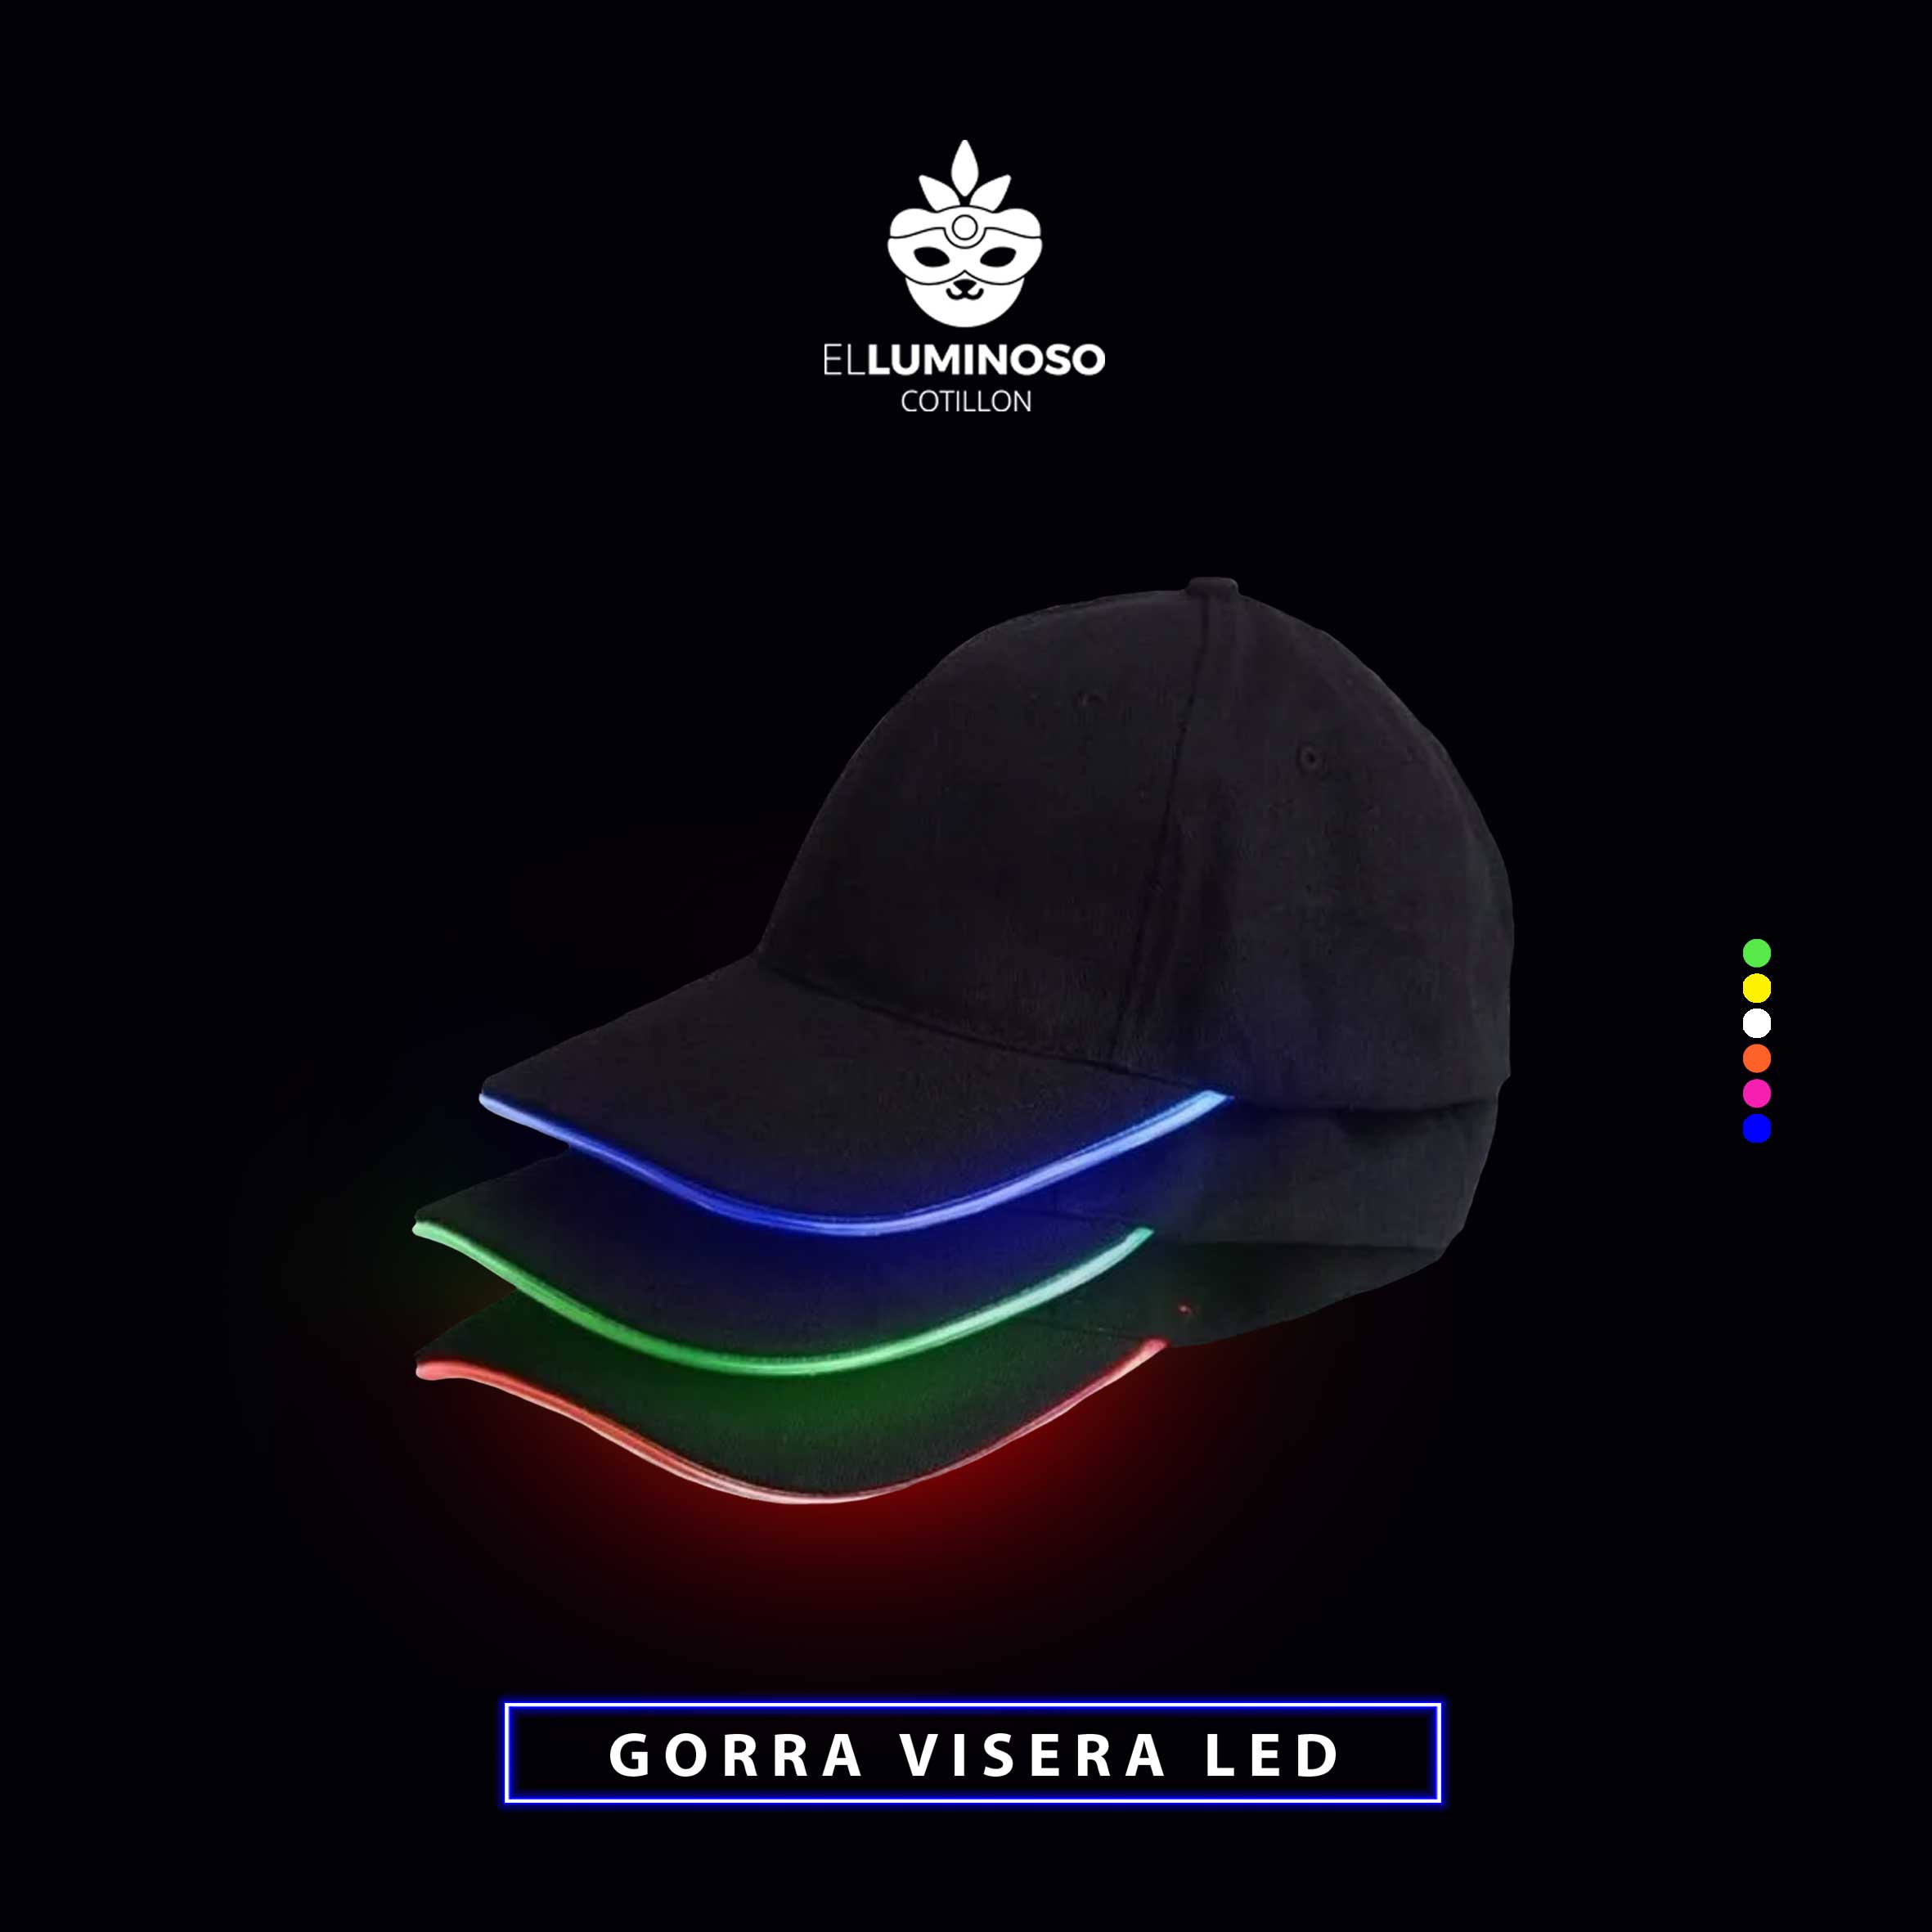 GORRA VISERA LED